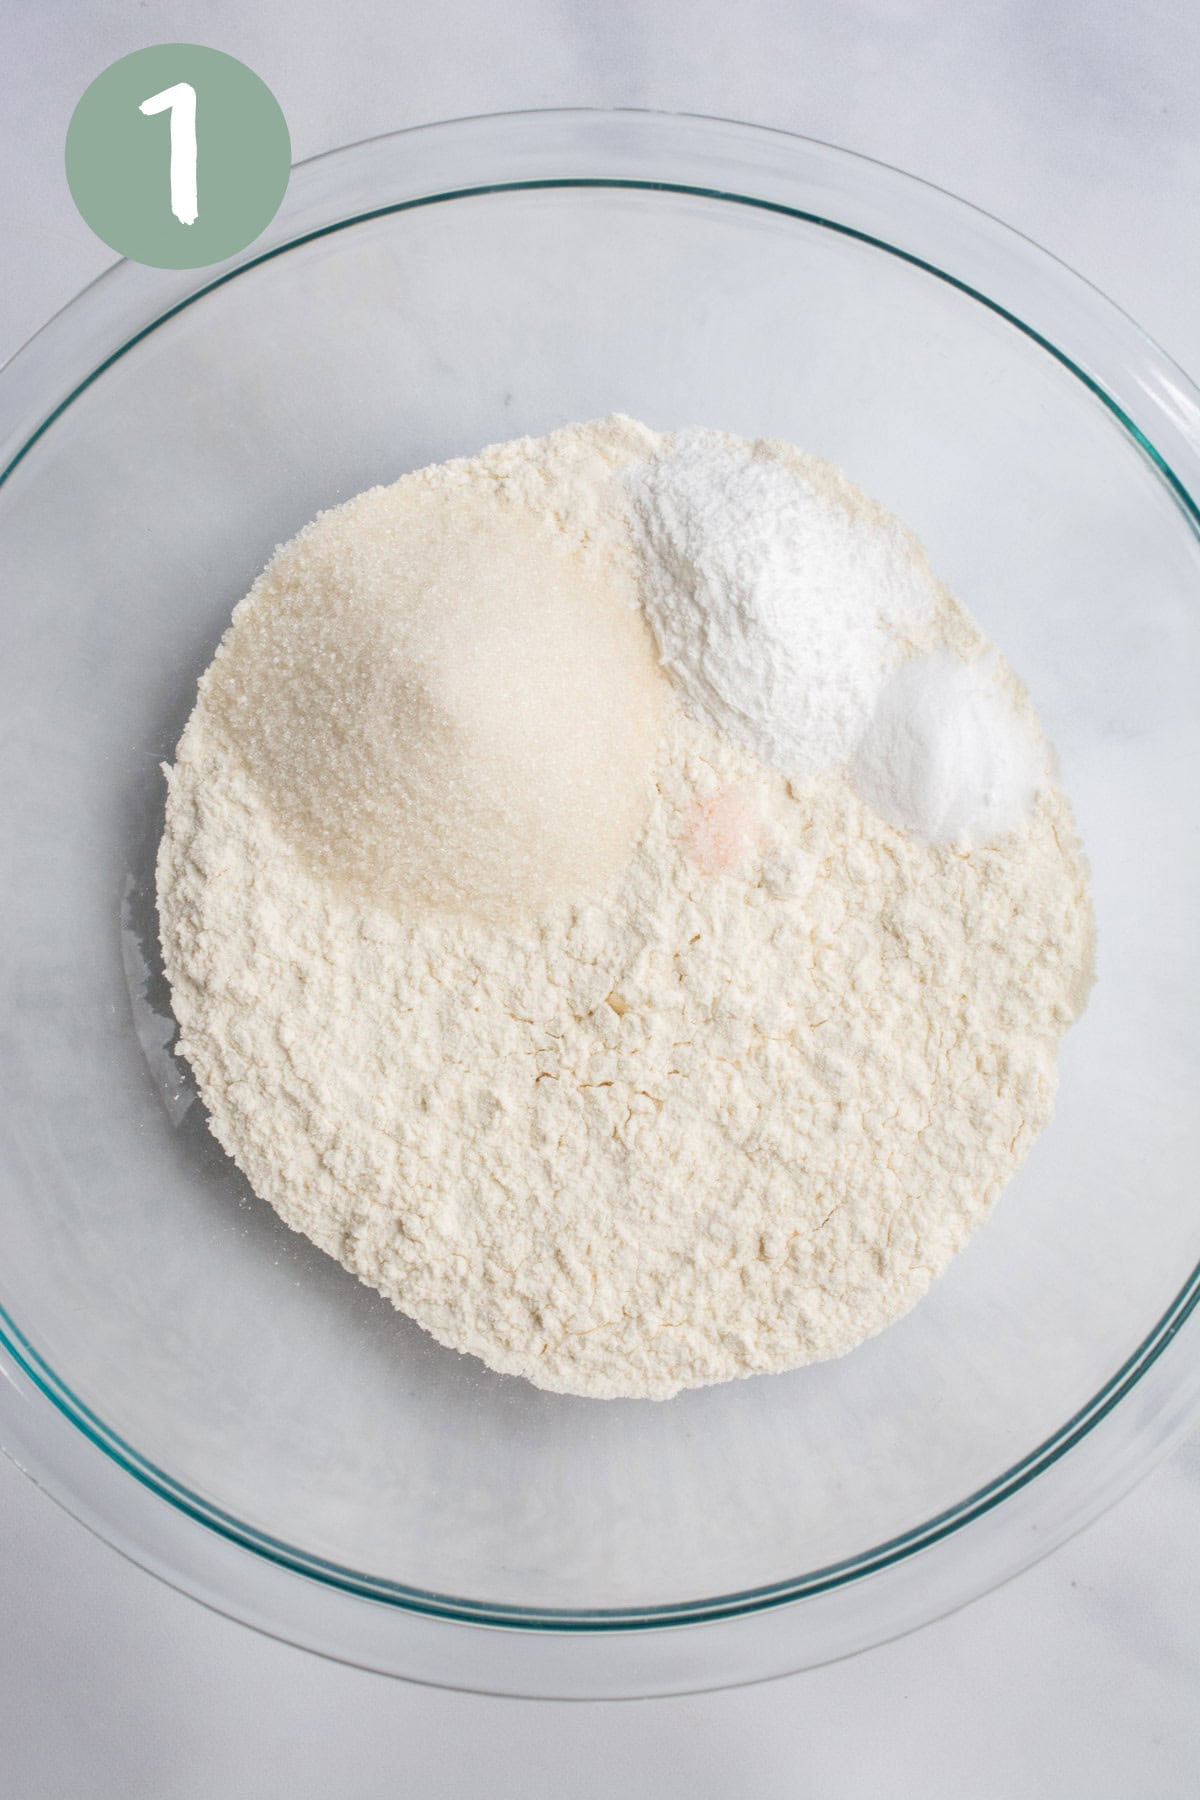 Flour, baking soda, baking powder, cane sugar, and salt in a glass bowl.